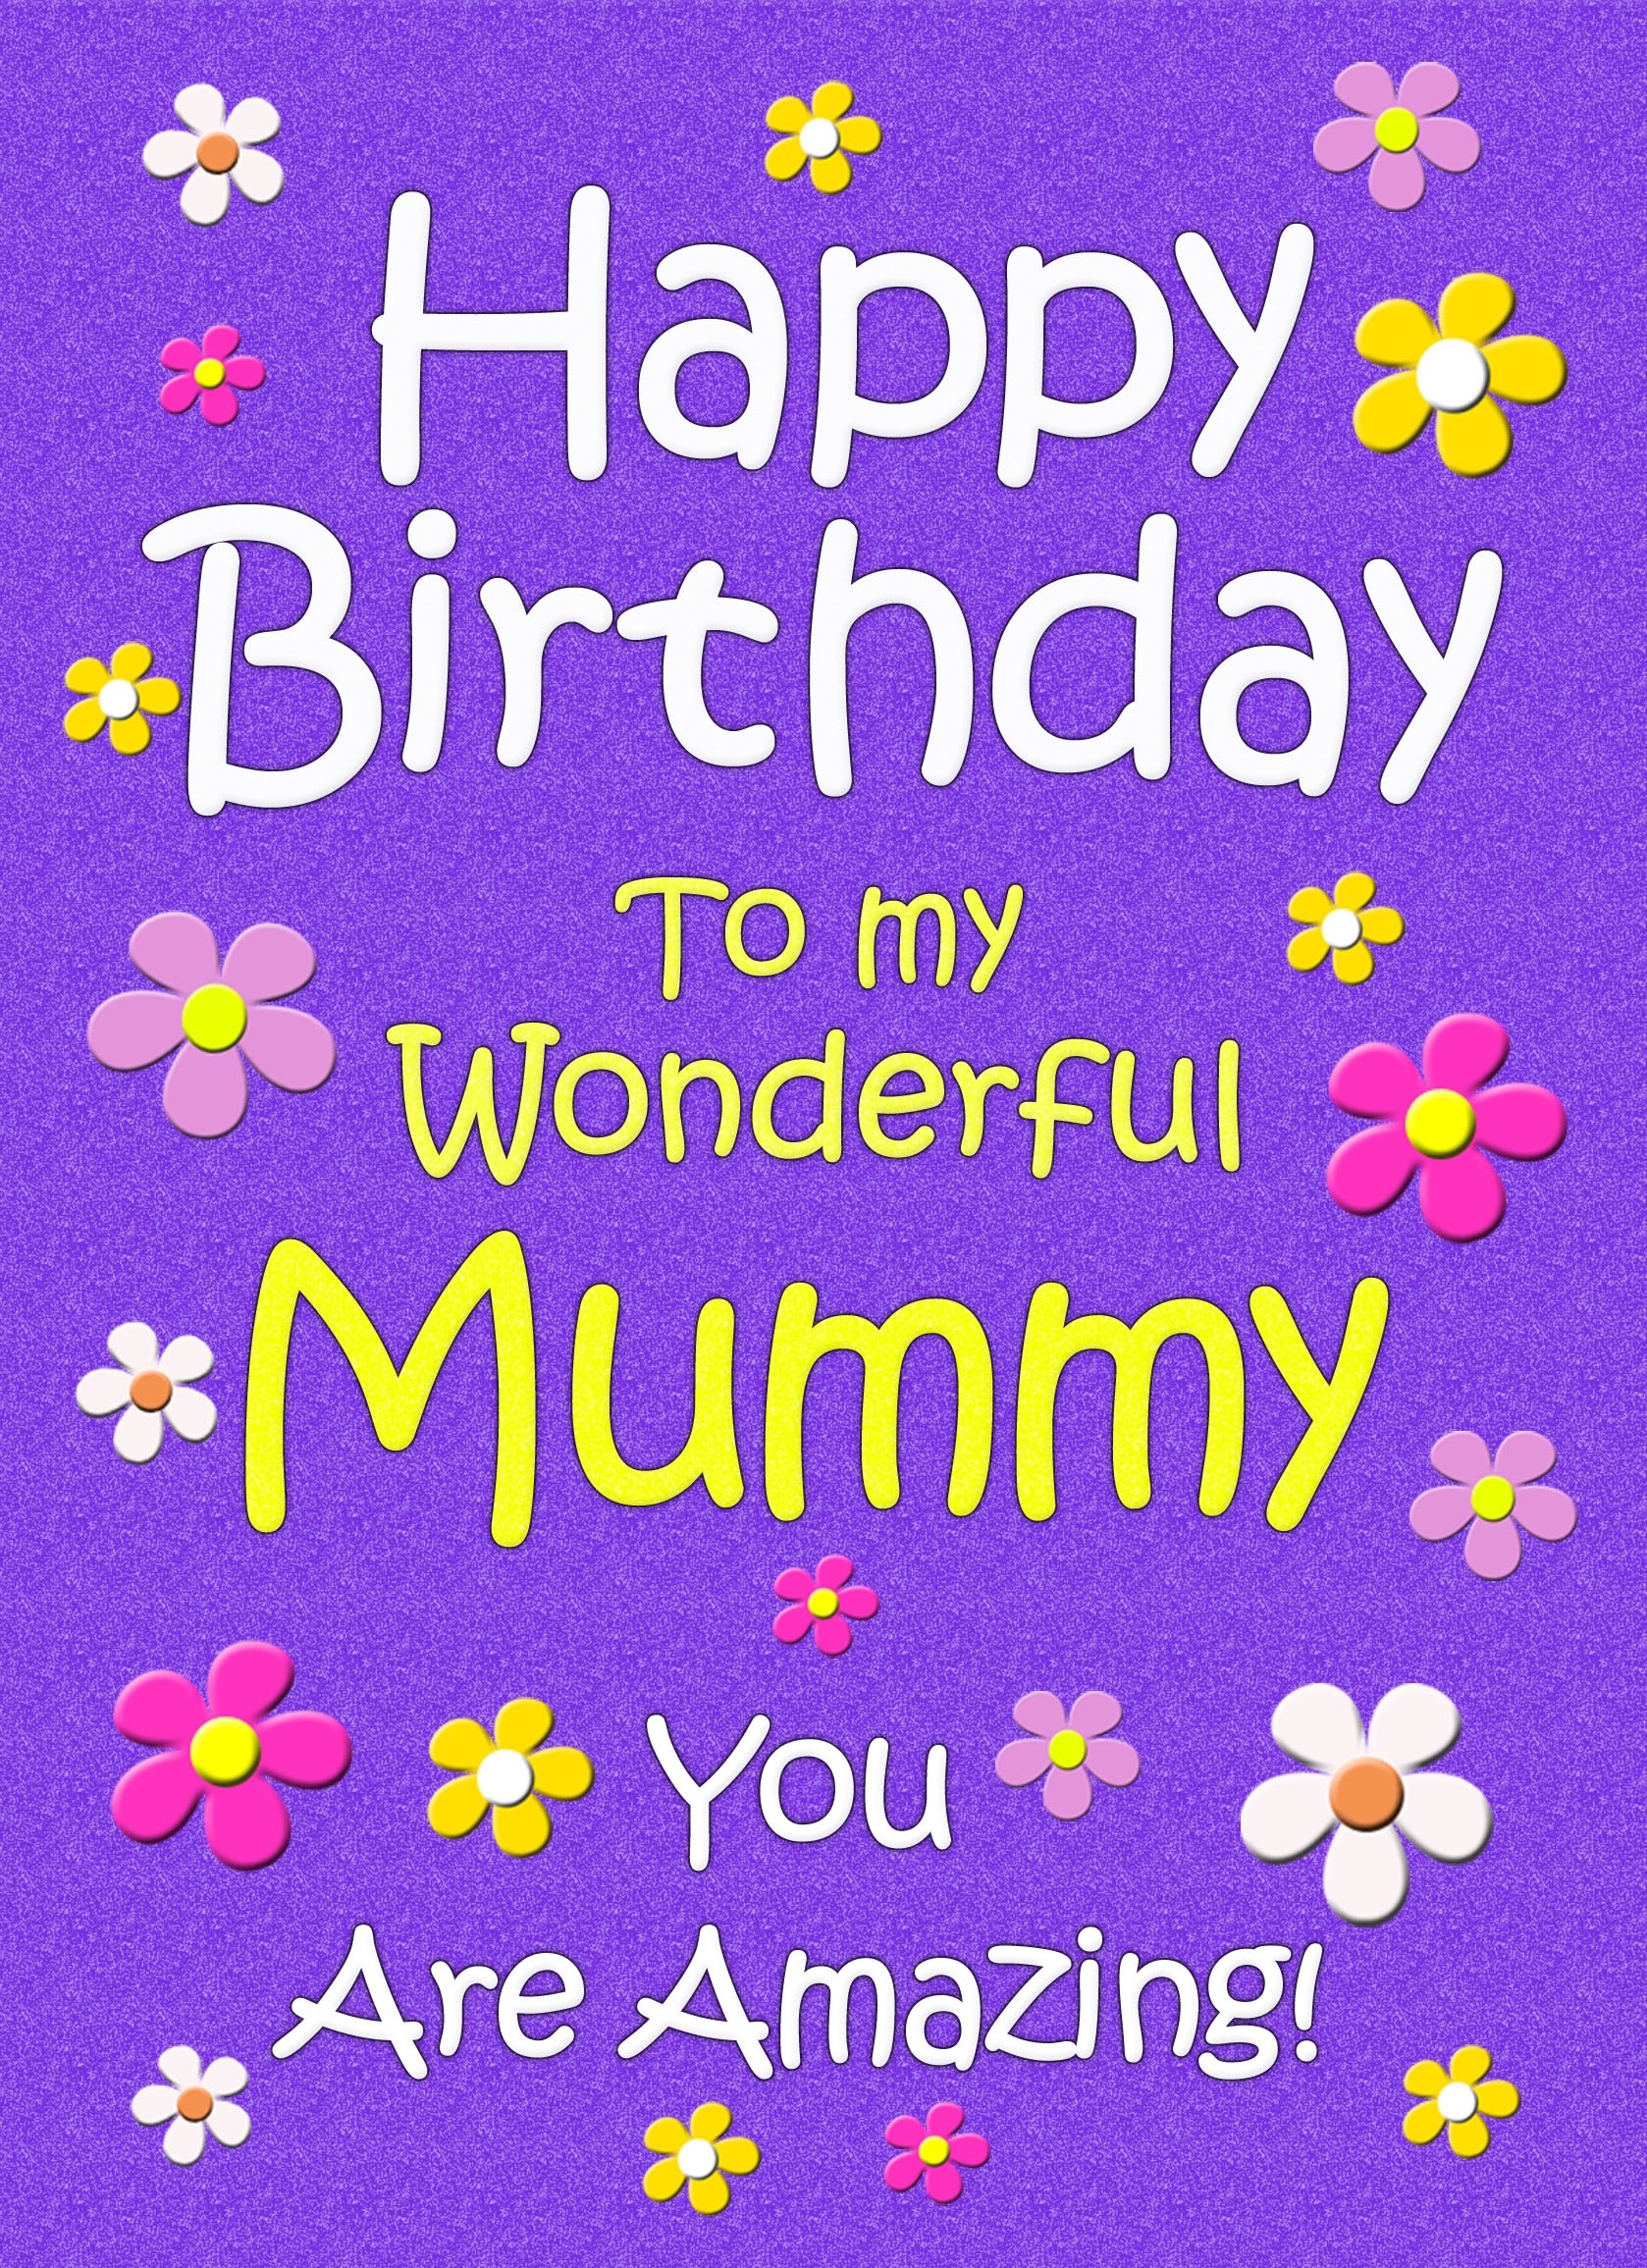 Mummy Birthday Card (Purple)